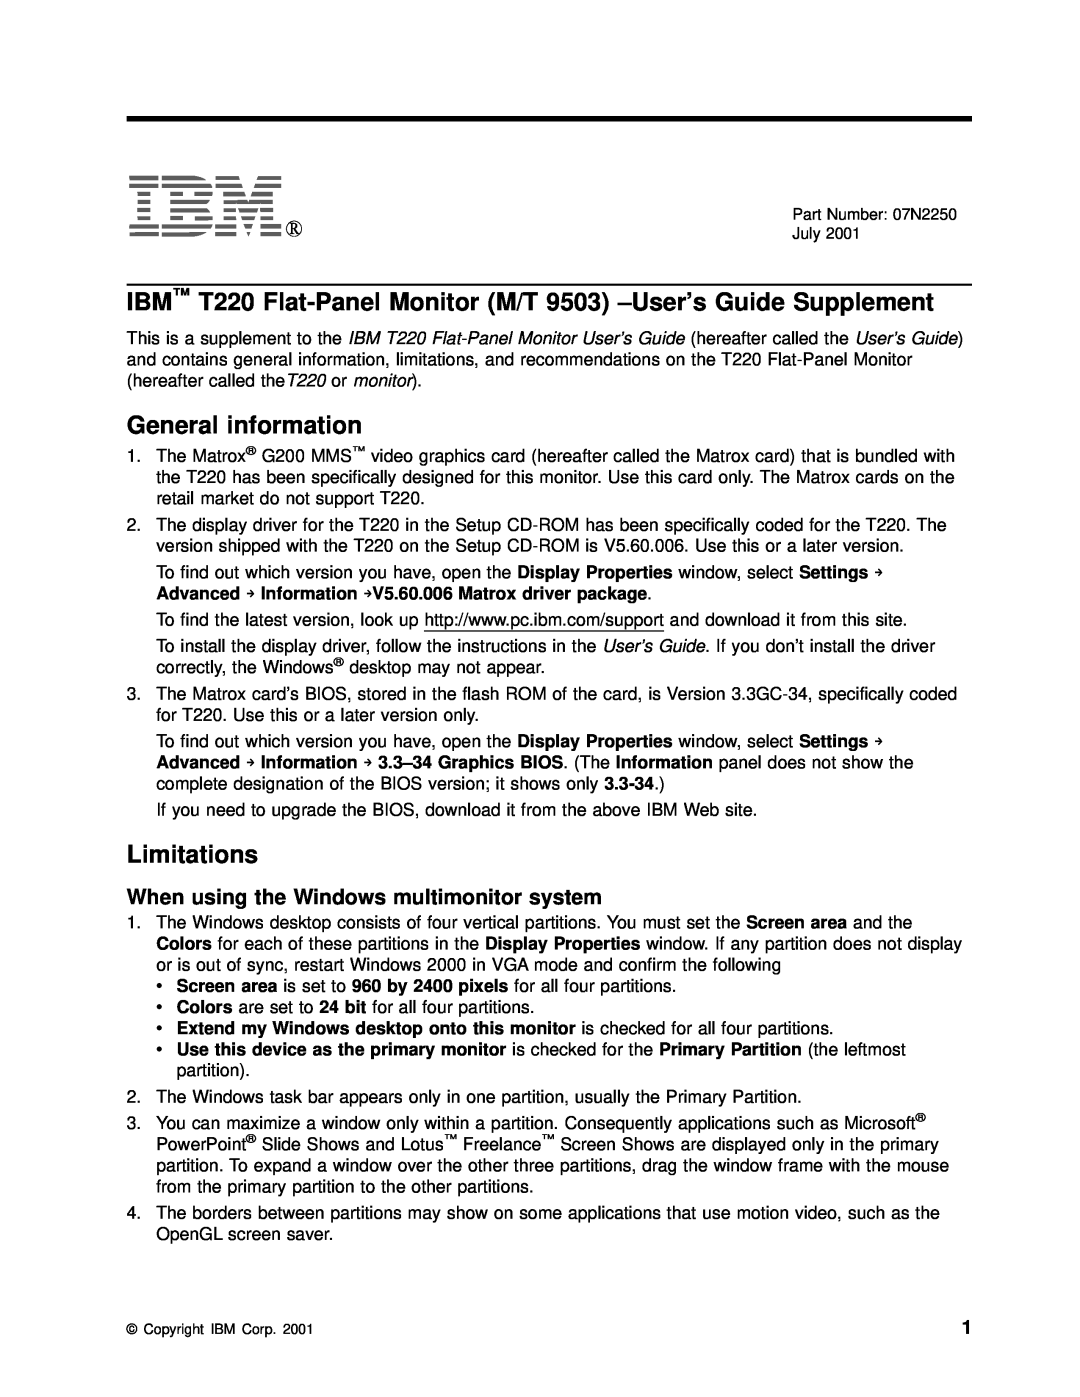 IBM 07N2250 manual IBM T220 Flat-Panel Monitor M/T 9503 -User’s Guide Supplement, General information, Limitations 